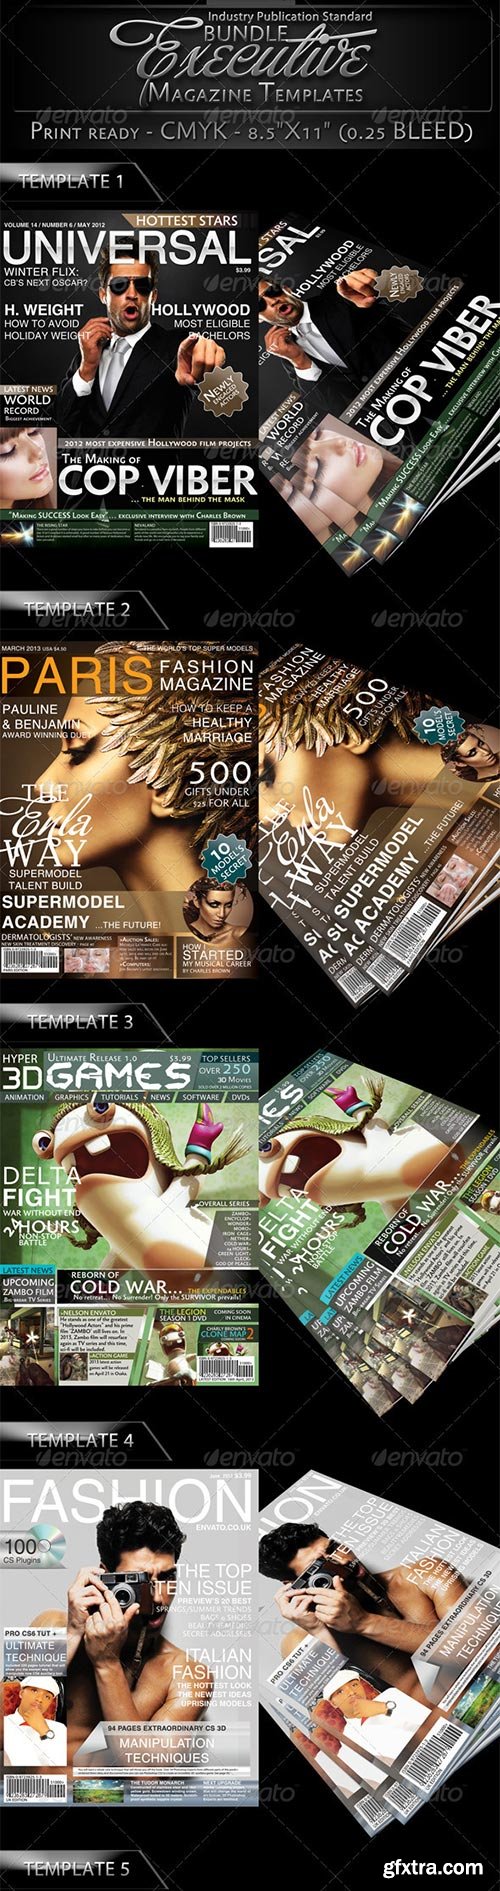 GraphicRiver - Executive Magazine Cover Templates Bundle